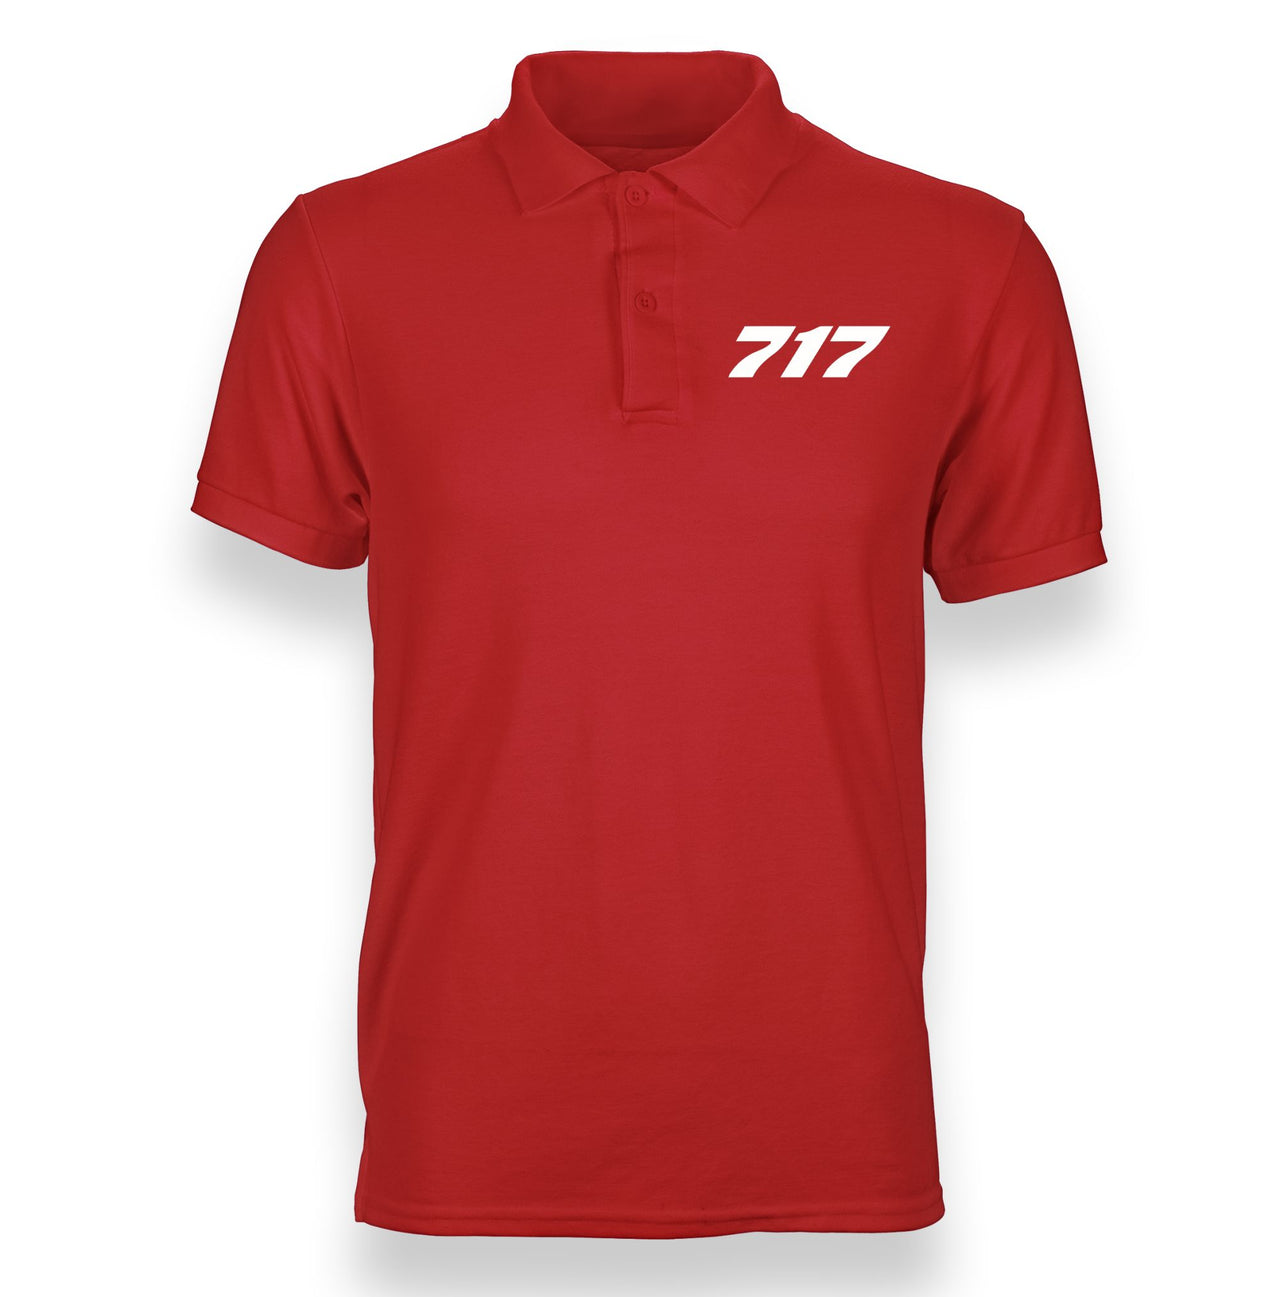 717 Flat Text Designed "WOMEN" Polo T-Shirts